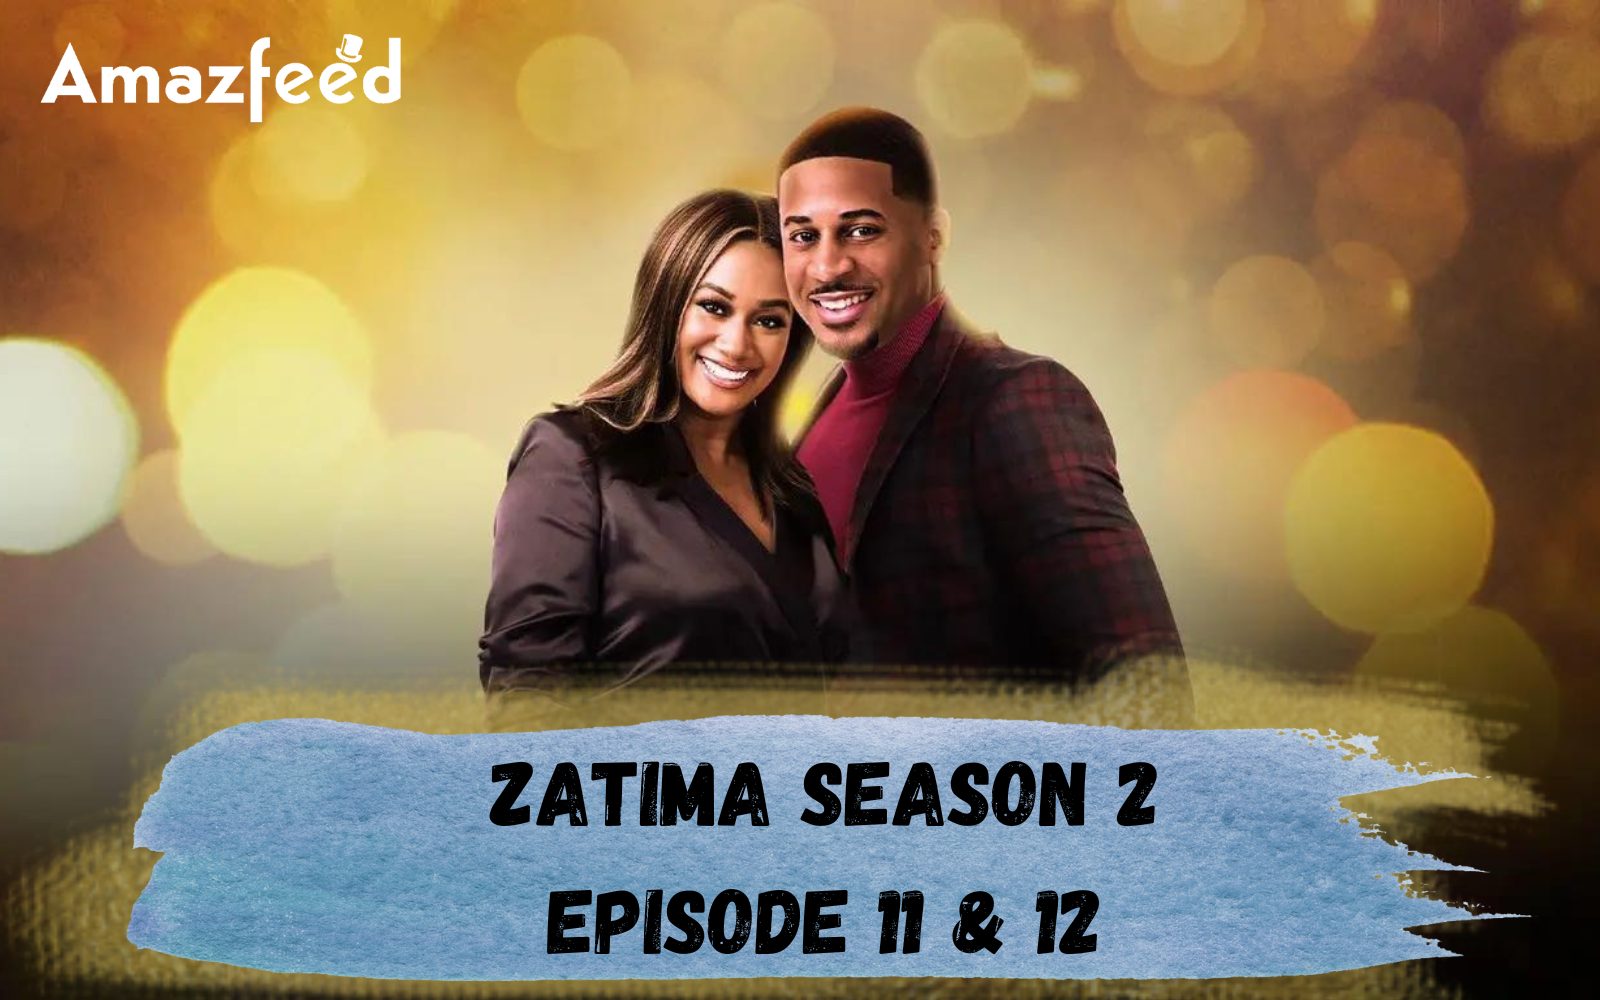 Zatima season 2 Episode 11 & 12 Confirmed Release Date, spoiler